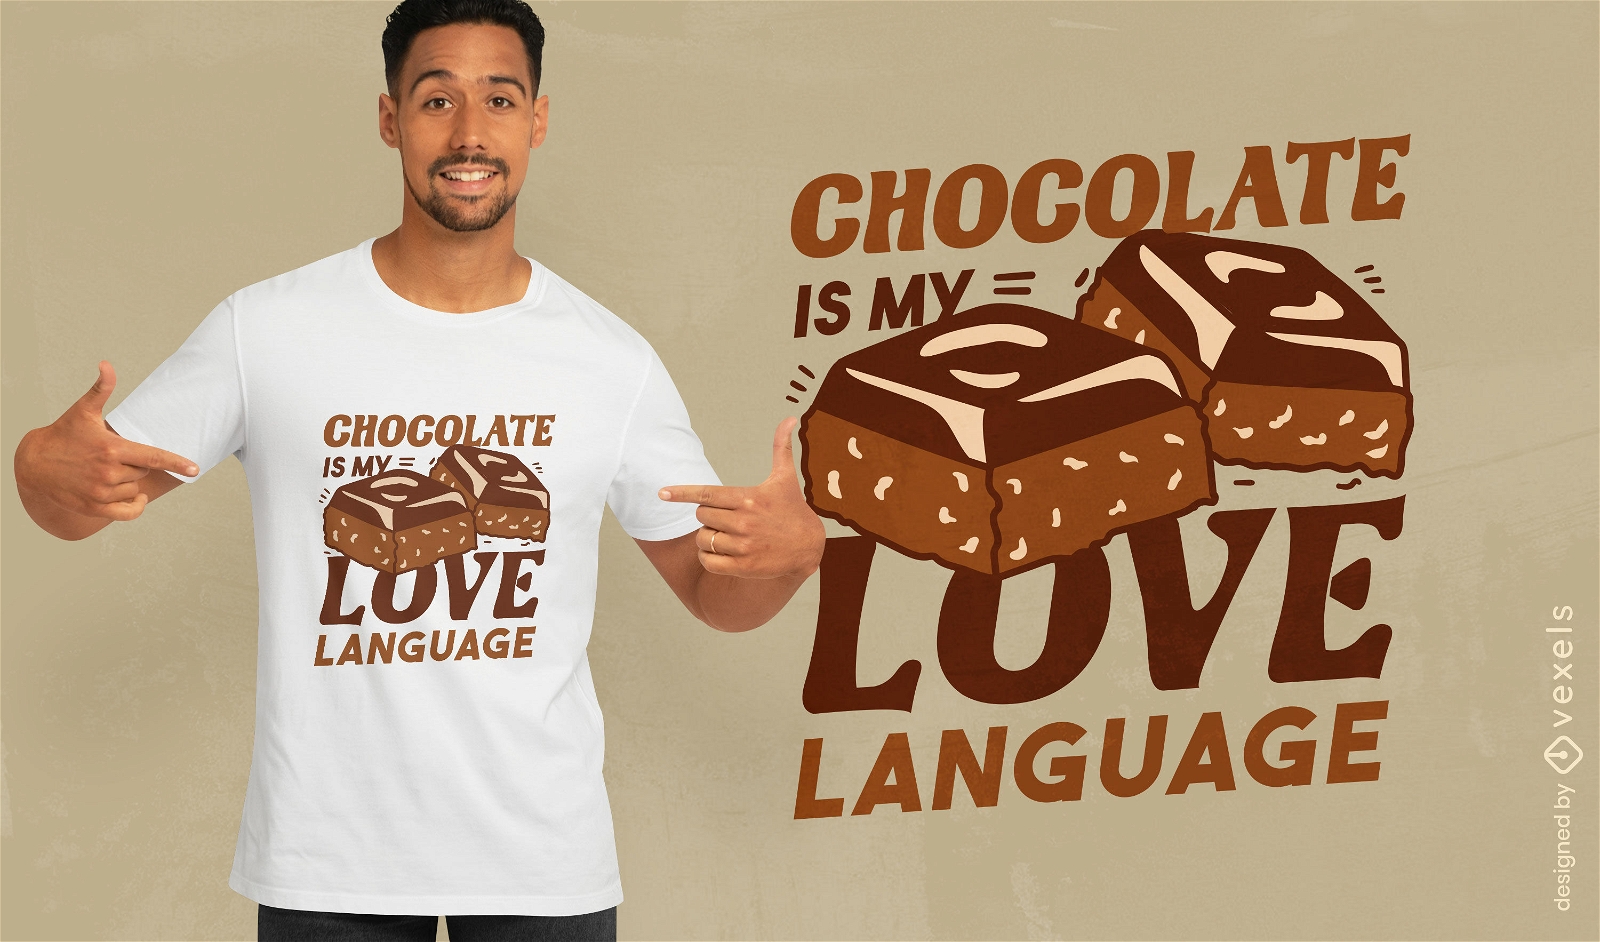 Chocolate love language t-shirt design